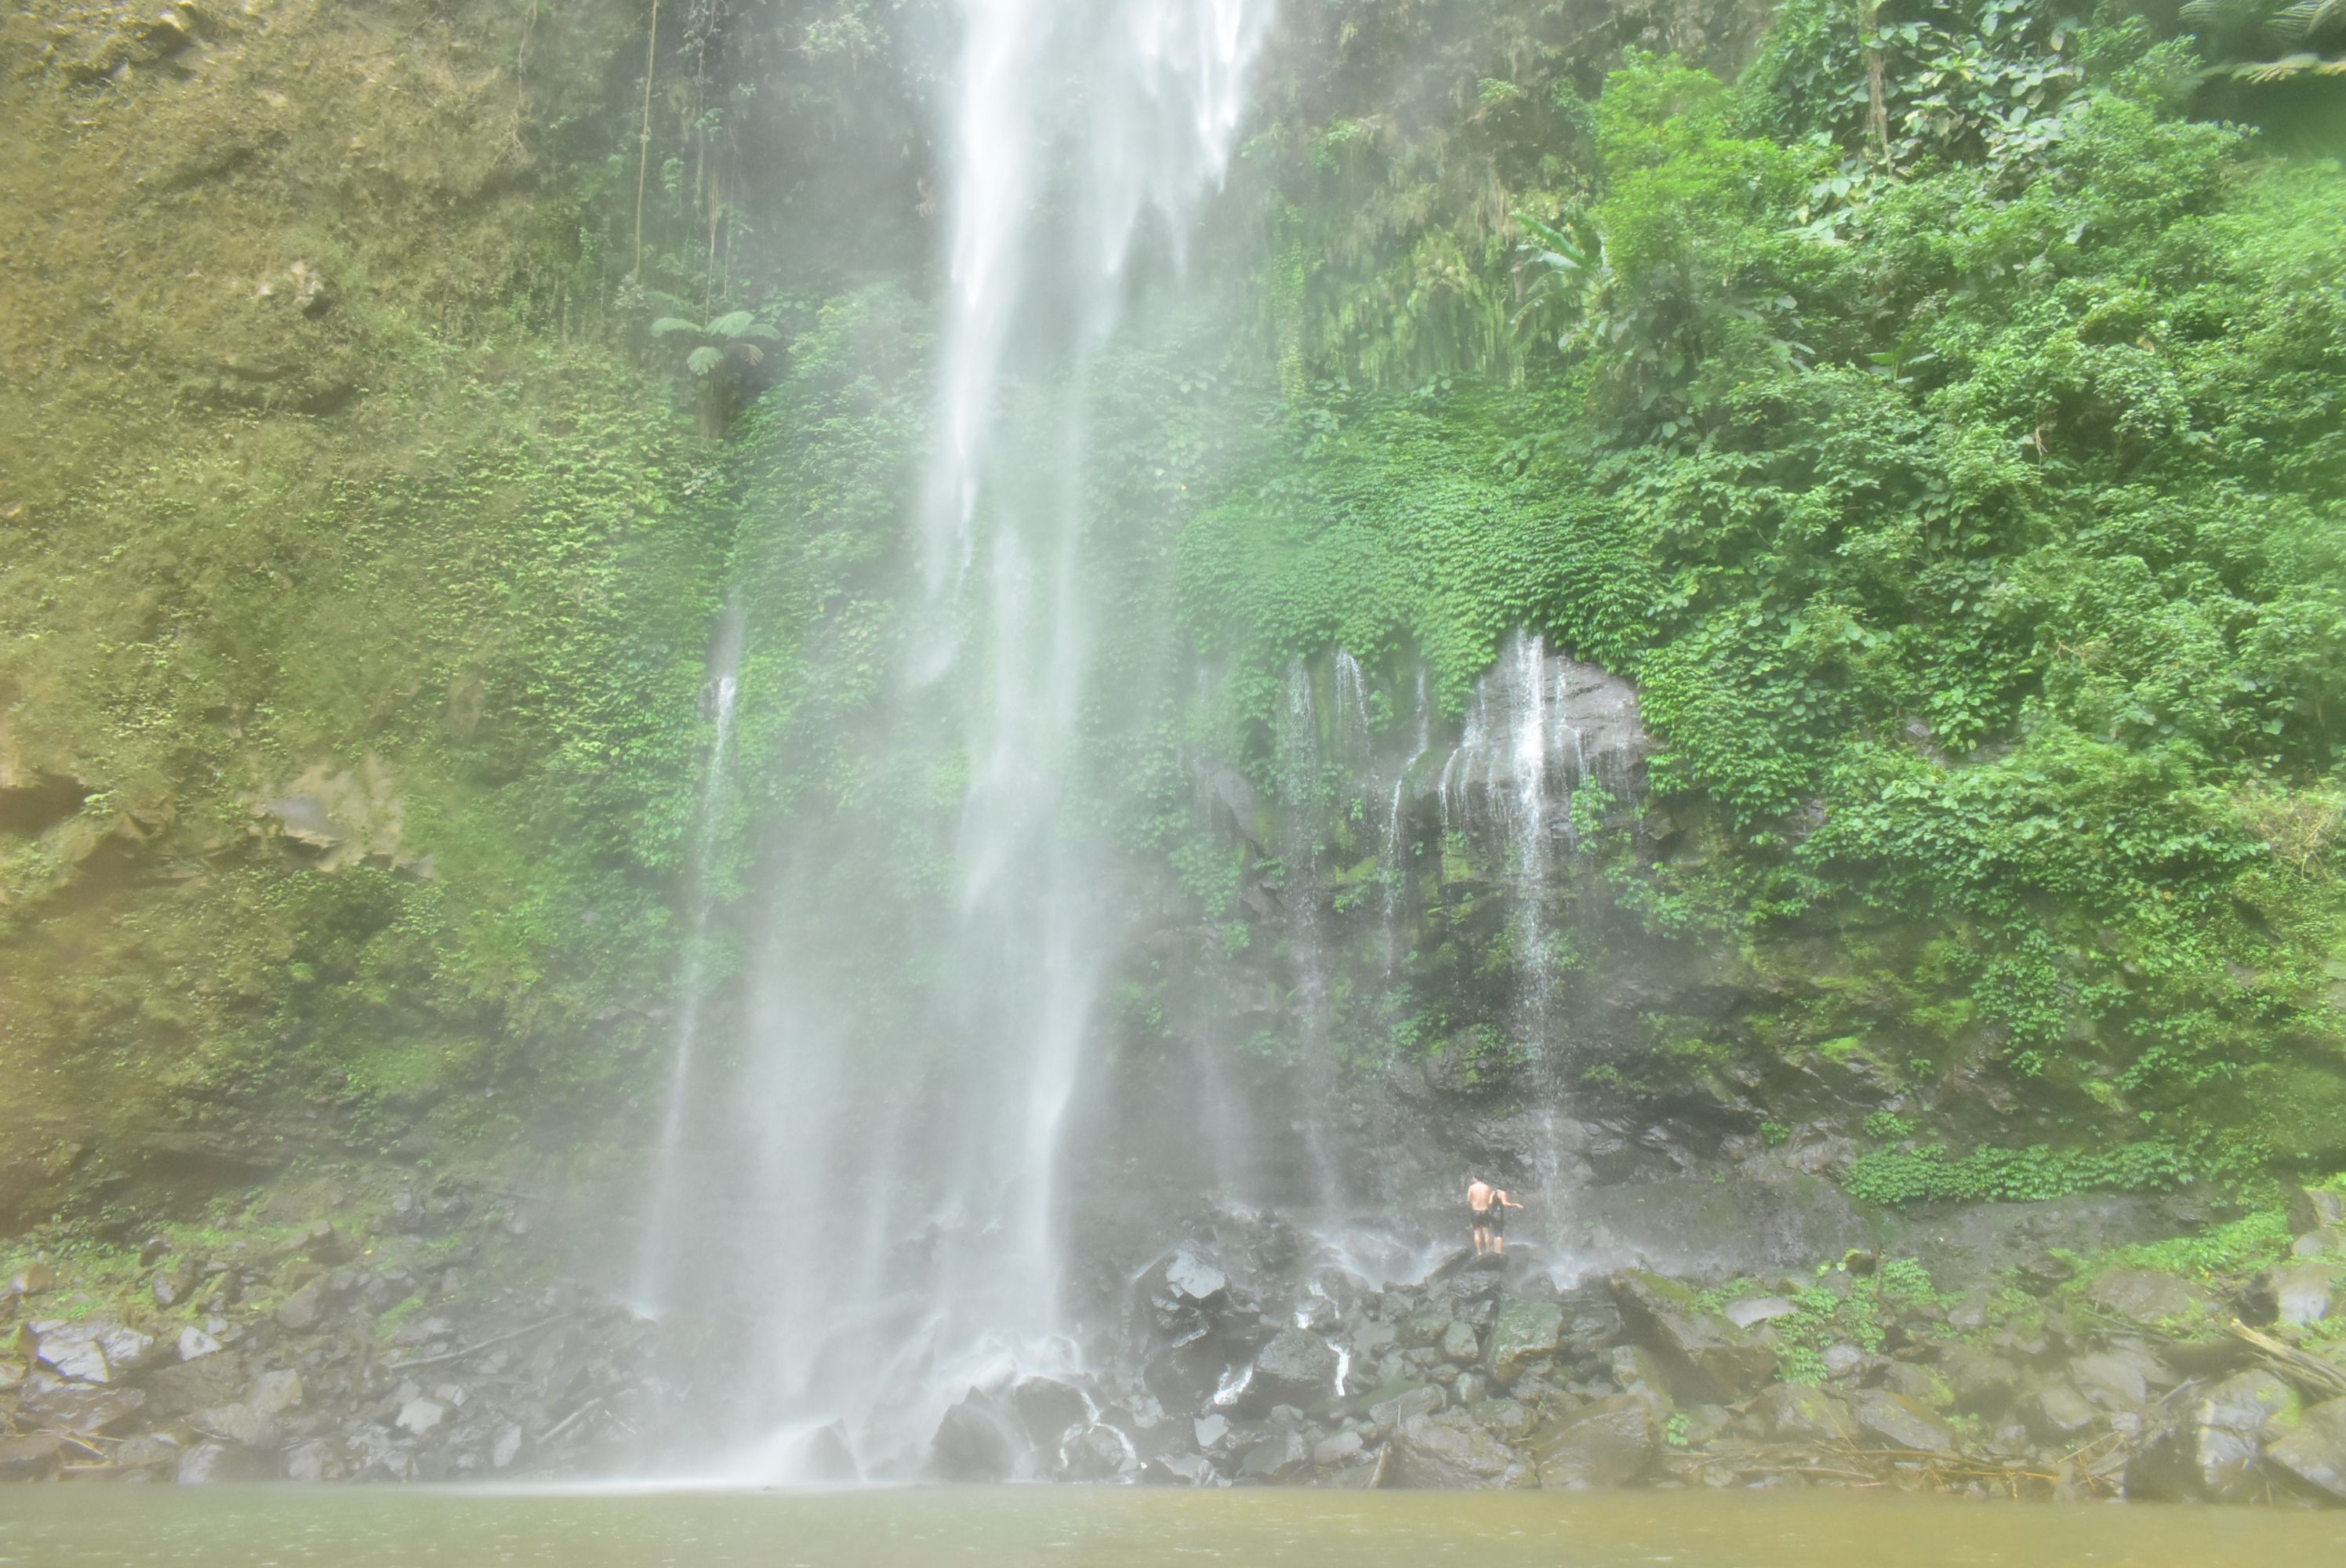 Visiting Tudaya Falls: Unforgiving, Rewarding